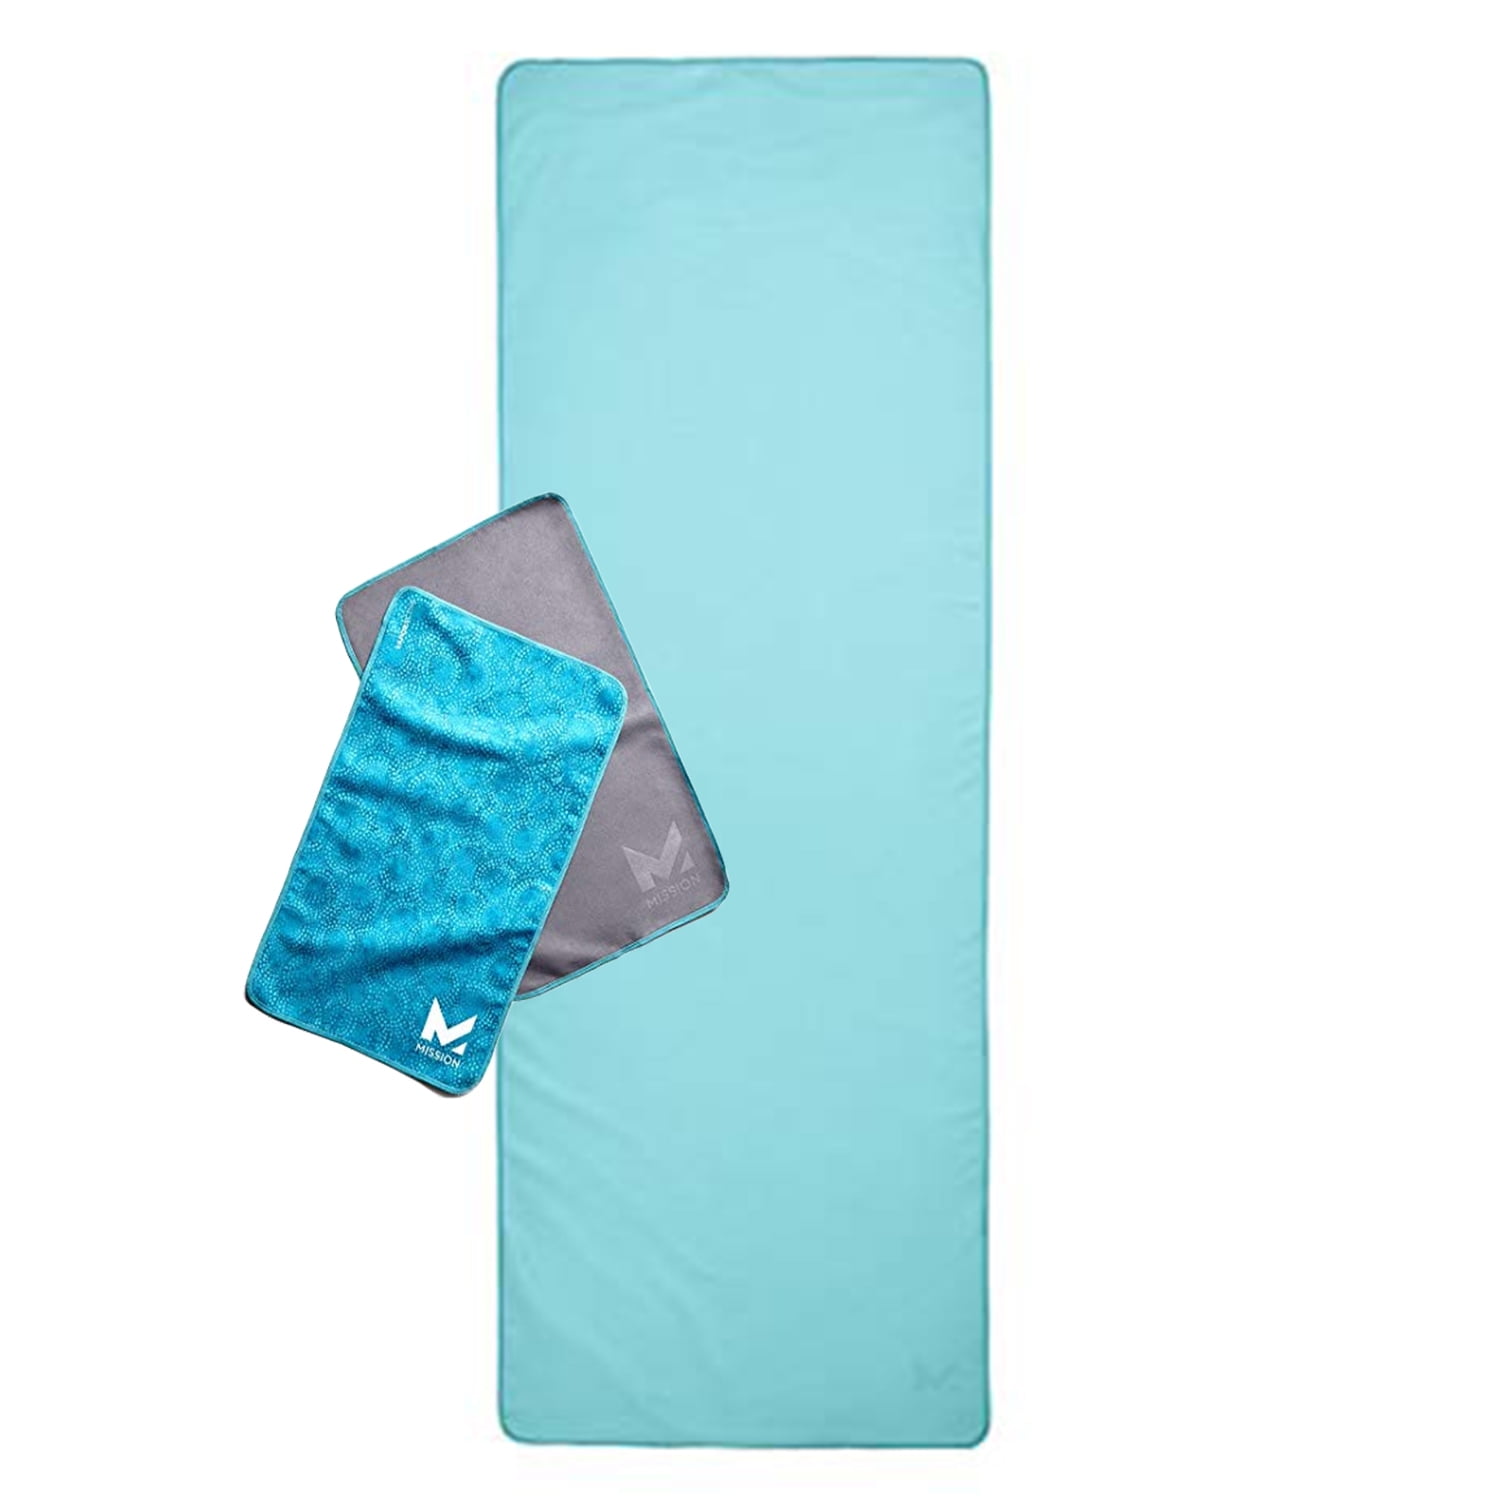 Mission VaporActive Yoga and Pilates Mat Towel/Cover and 2 Hand Towel Bundle (3 Items Bundle)